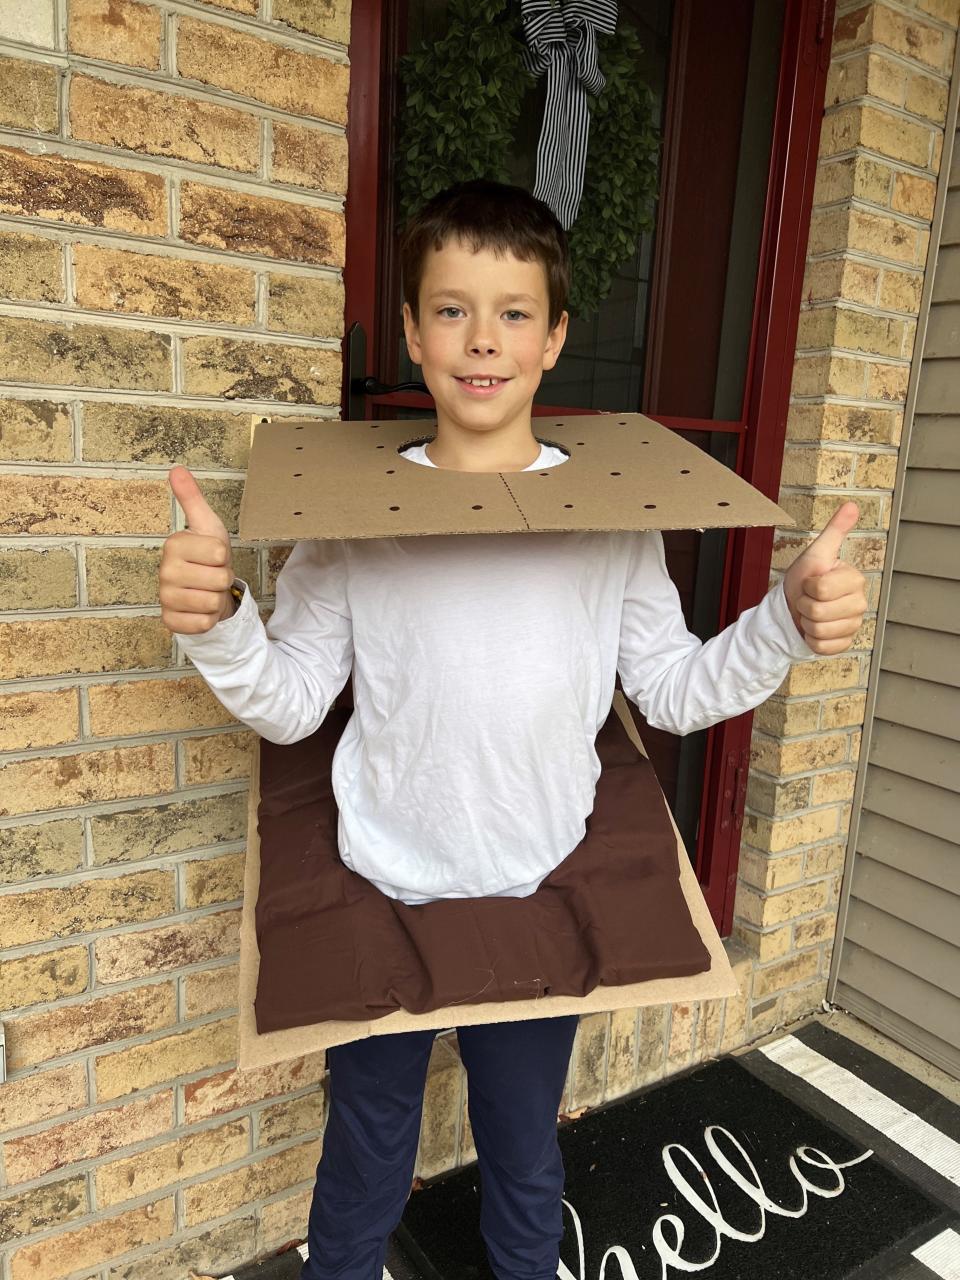 Oshkosh's Austin Otto, 9, poses in his s'mores Halloween costume.